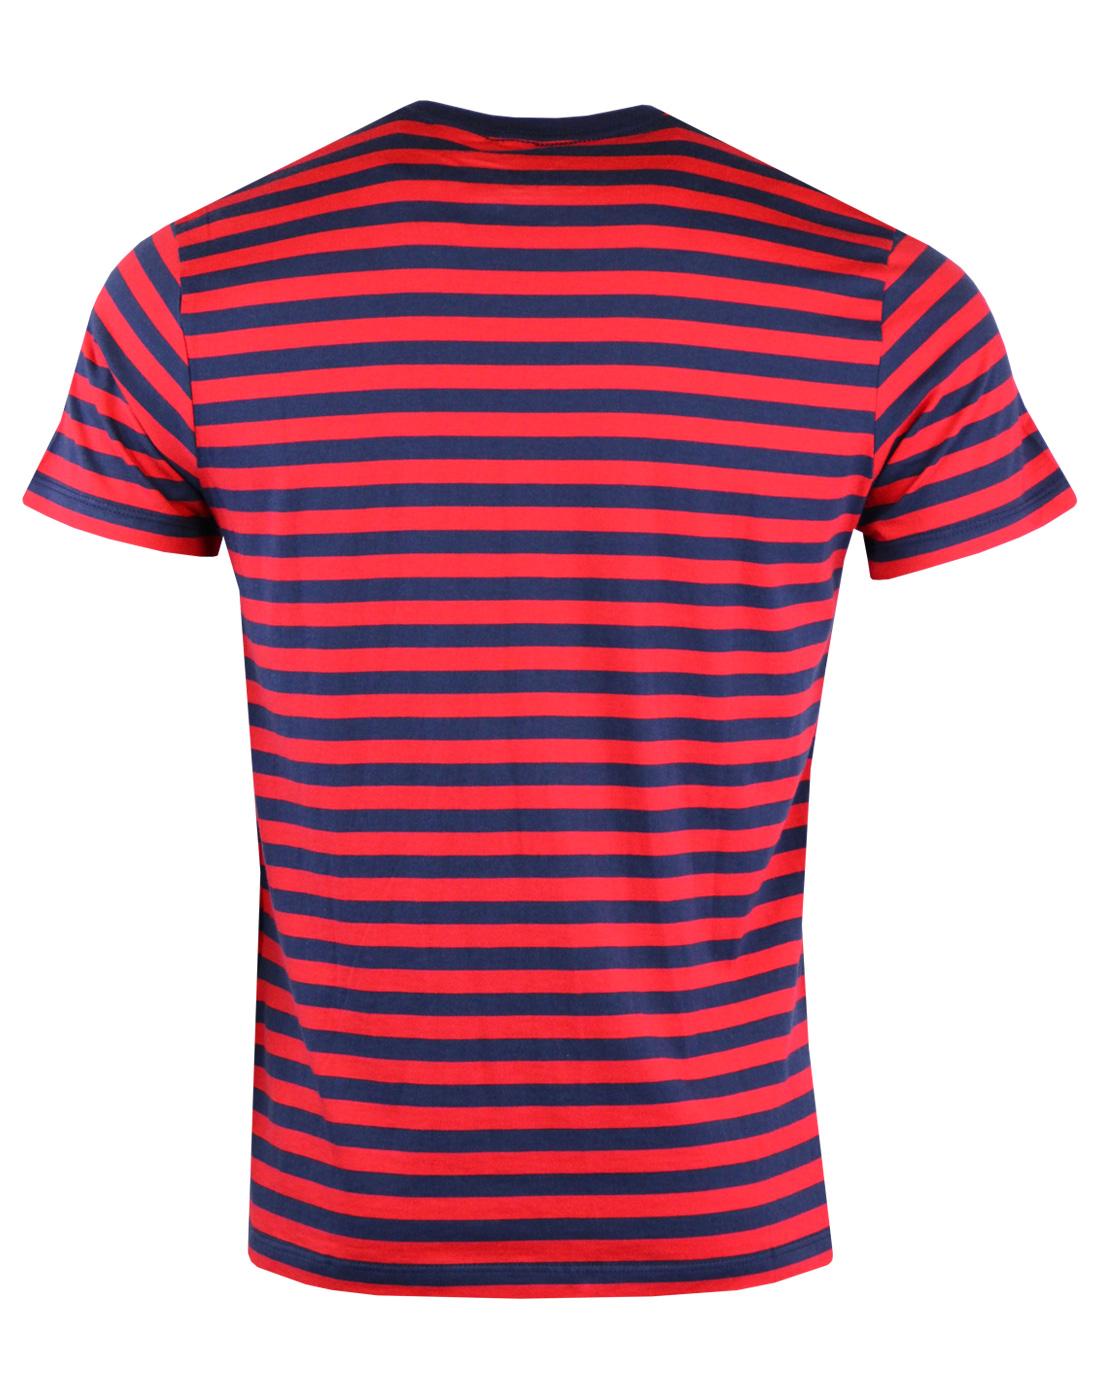 LEVI'S Men's Retro Mod Stripe Sunset Pocket T-Shirt in Red/Navy